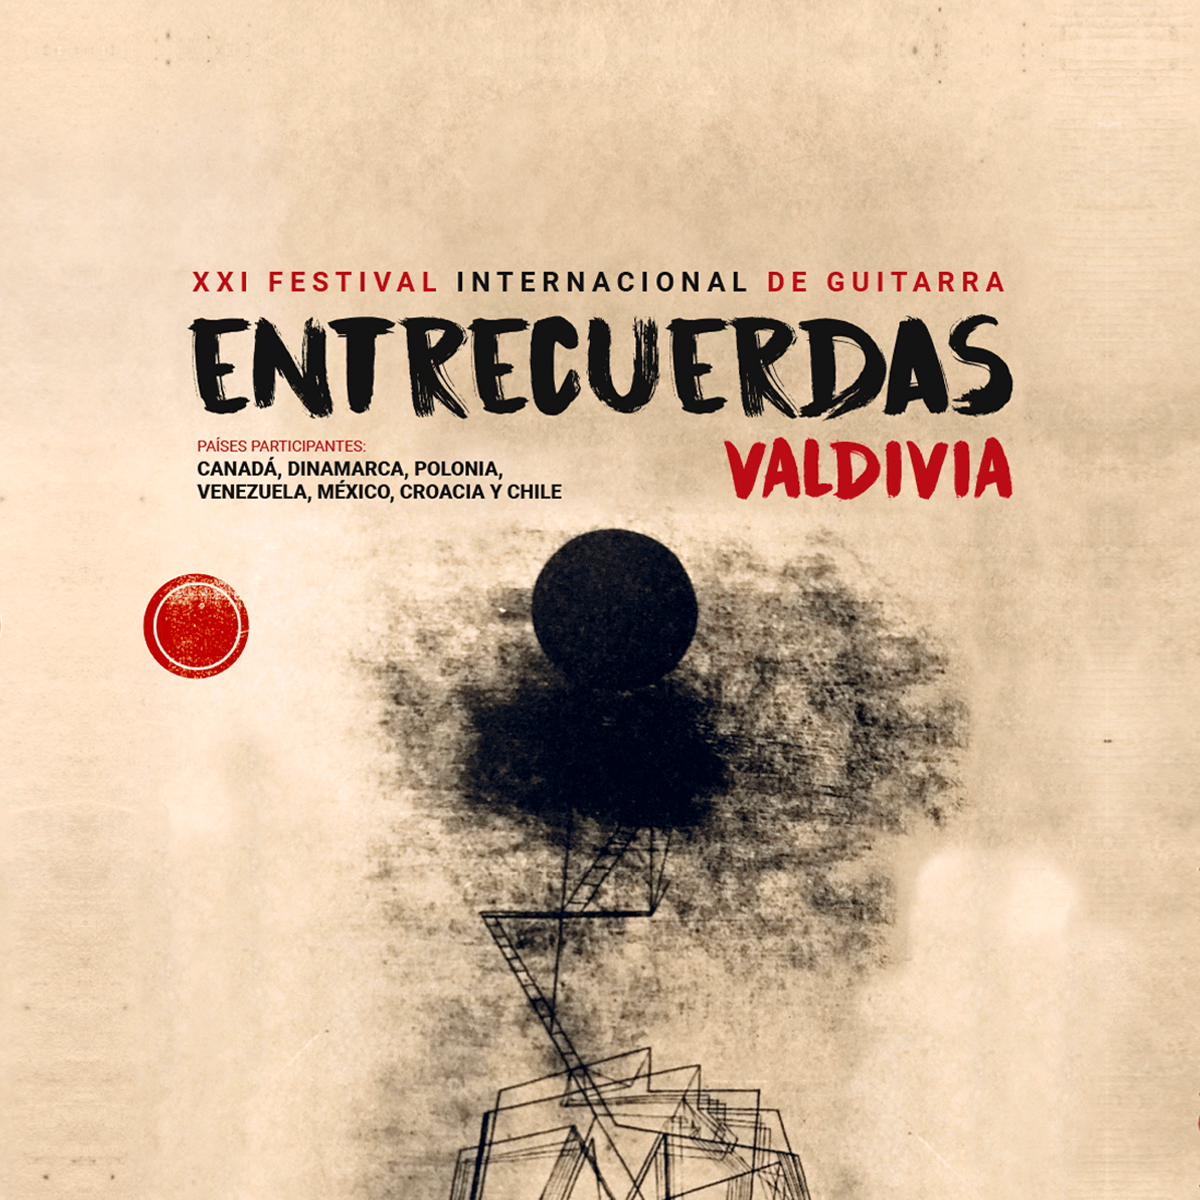 jonas_egholm_concert_2021_january_XXI-Festival-Internacional-de-Guitarra-Entrecuerdas-Valdivia